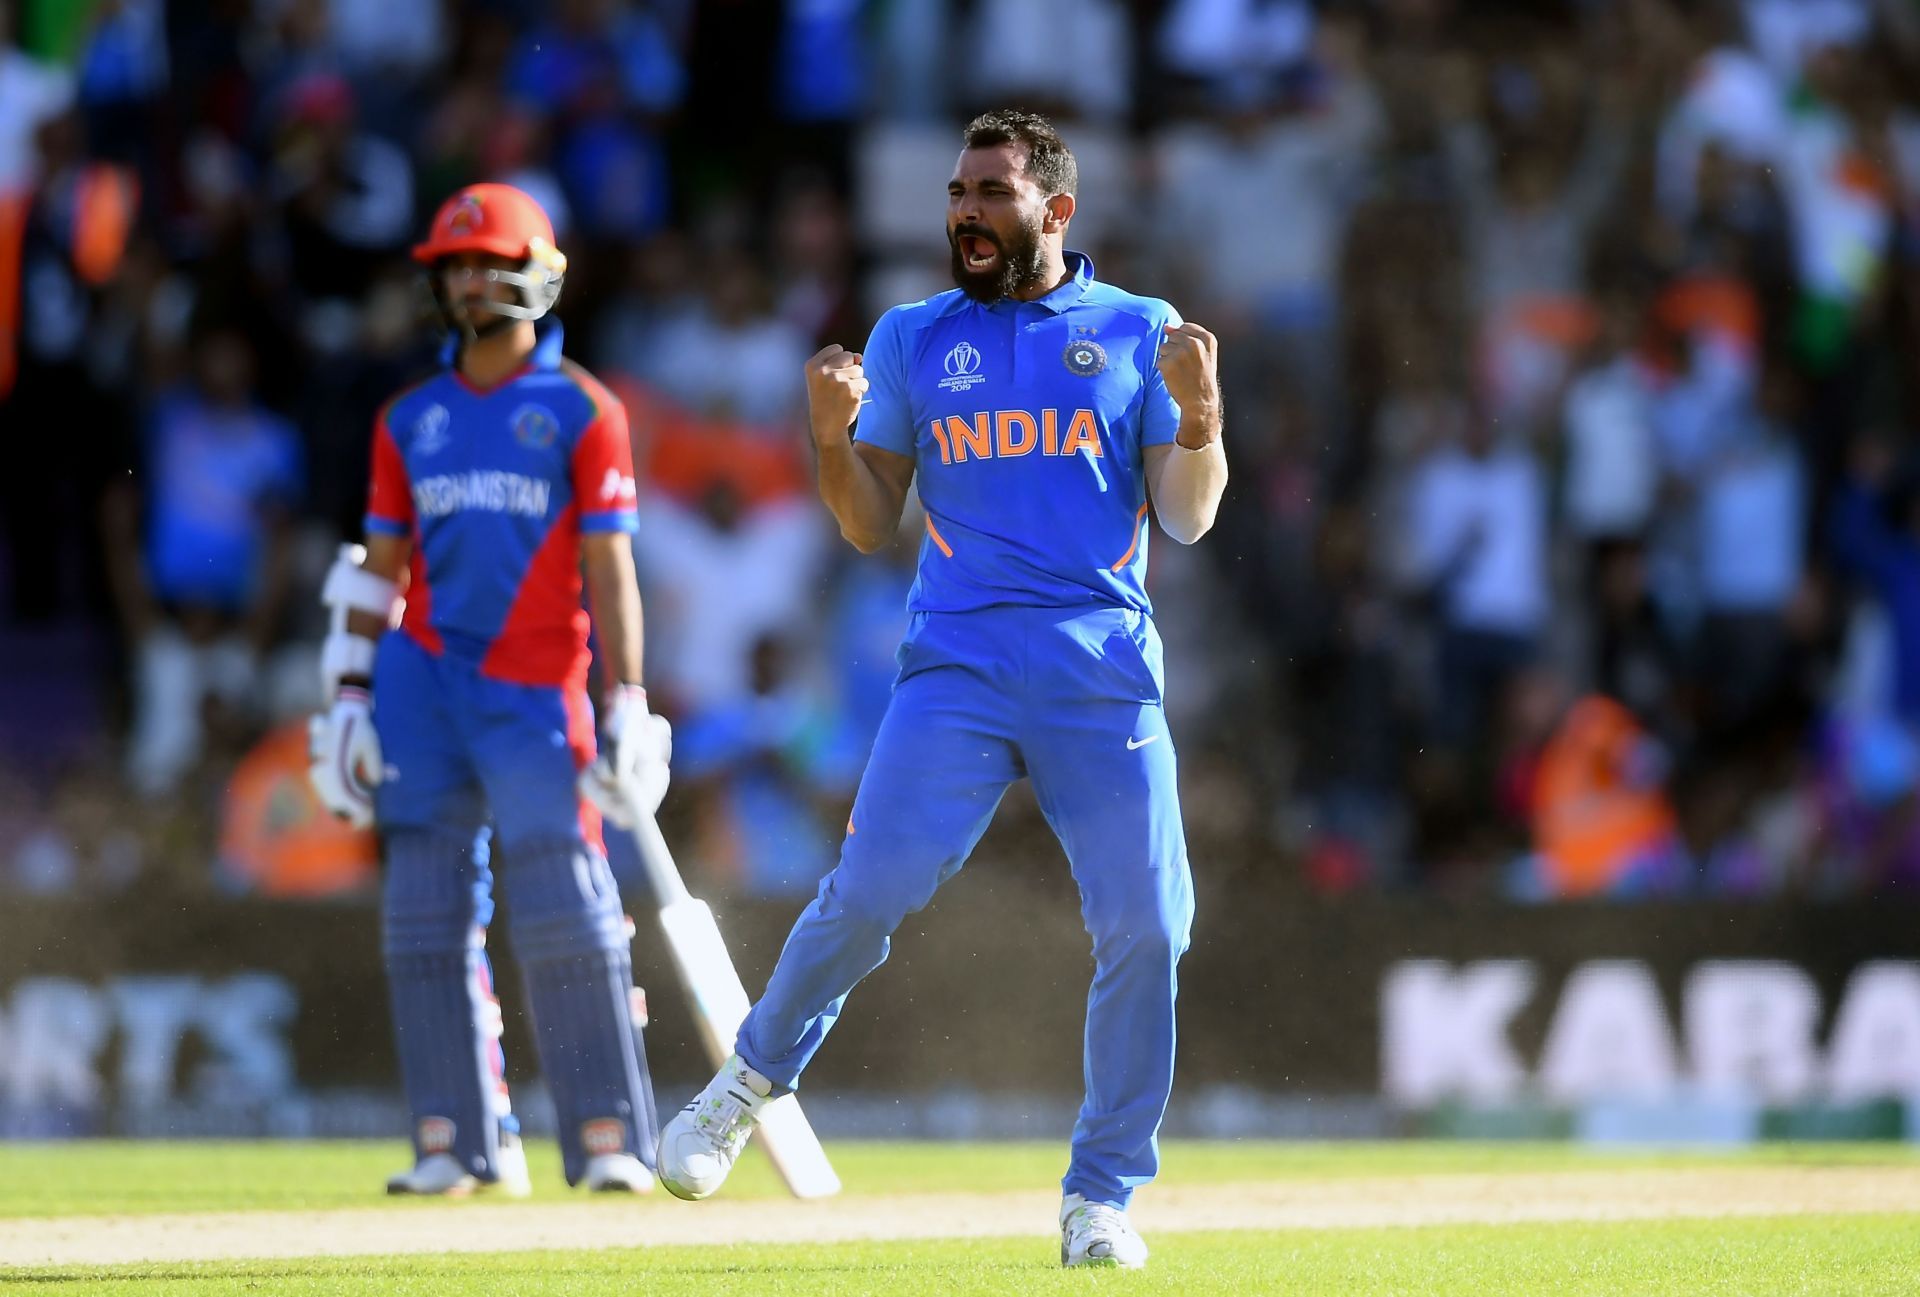 Mohammed Shami took five four-wicket hauls in ODI matches under Virat Kohli